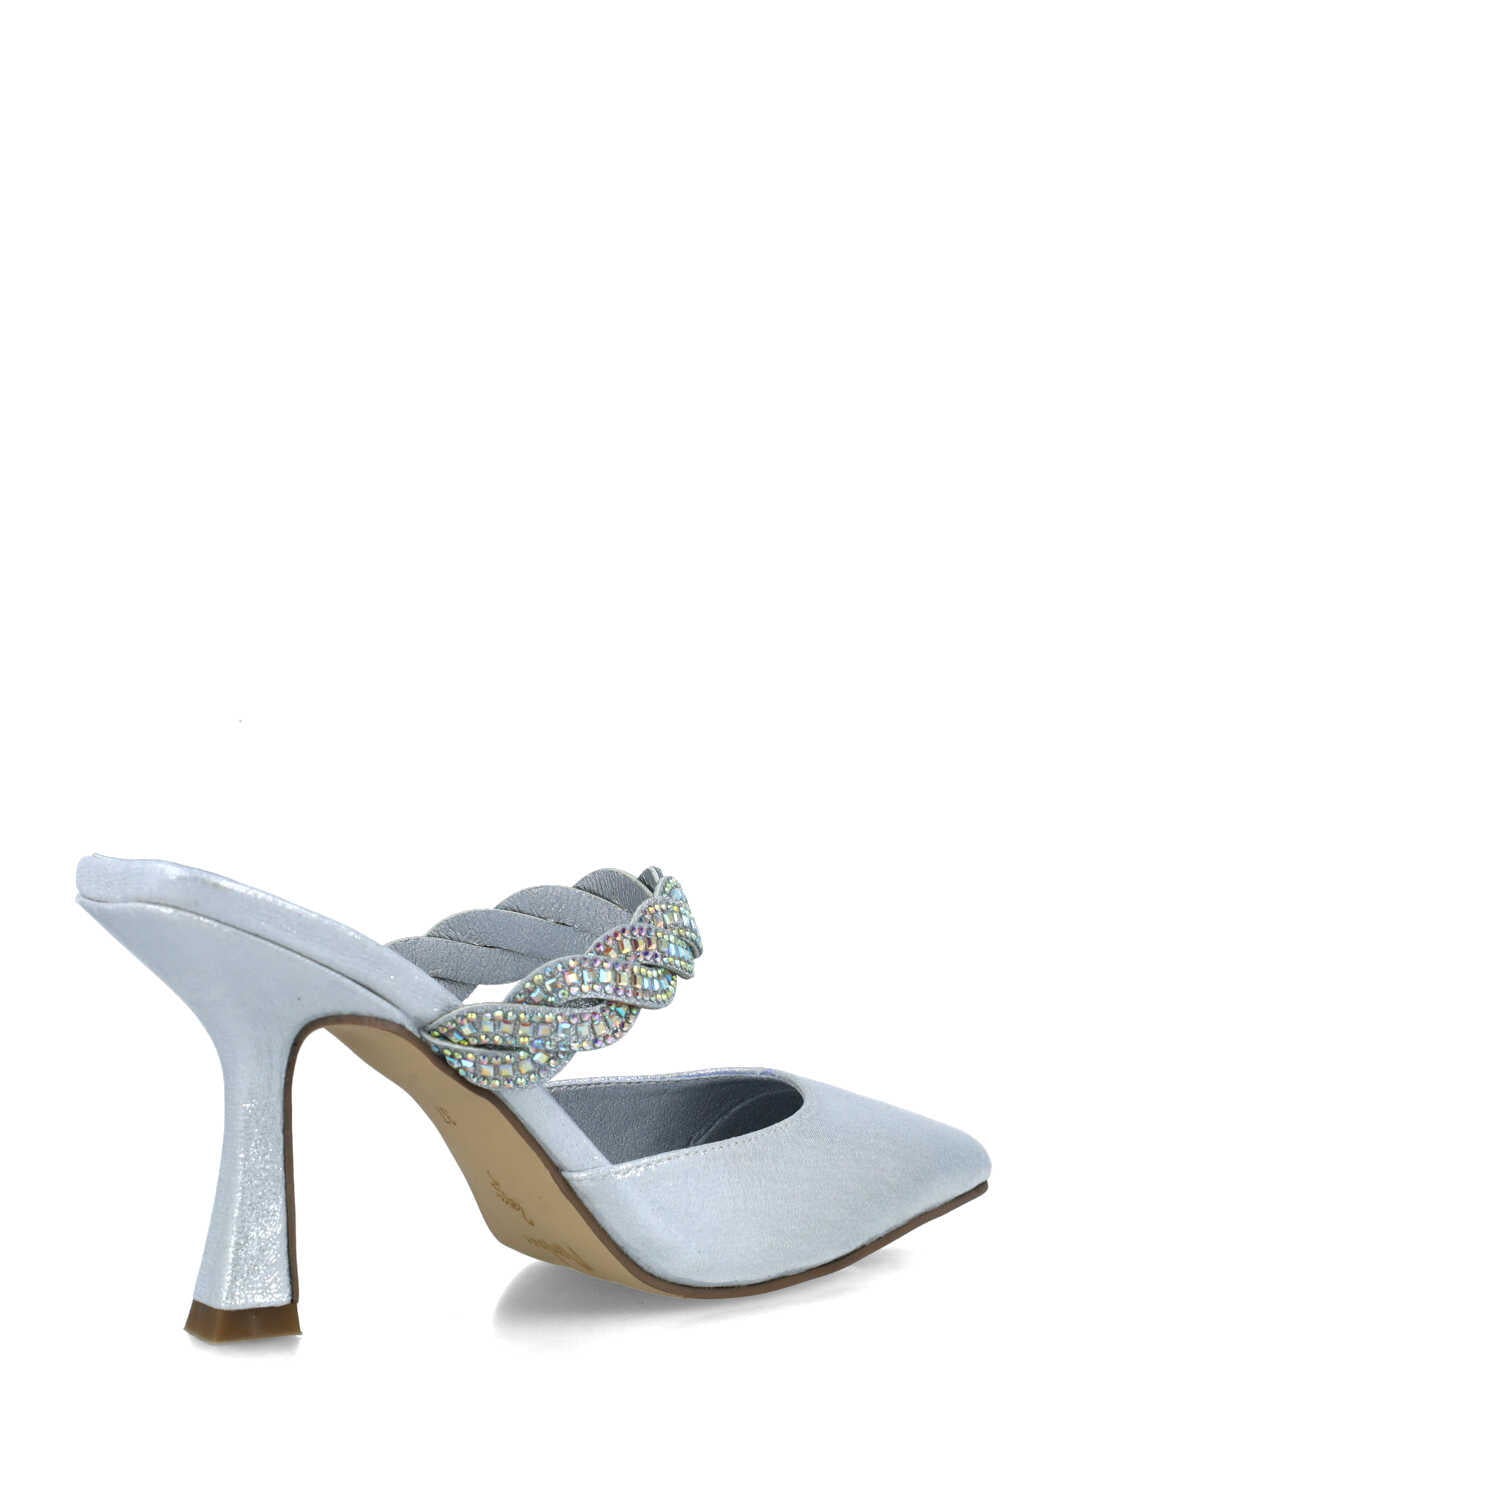 Silver Sandal With Embellished Strap_24795_09_03